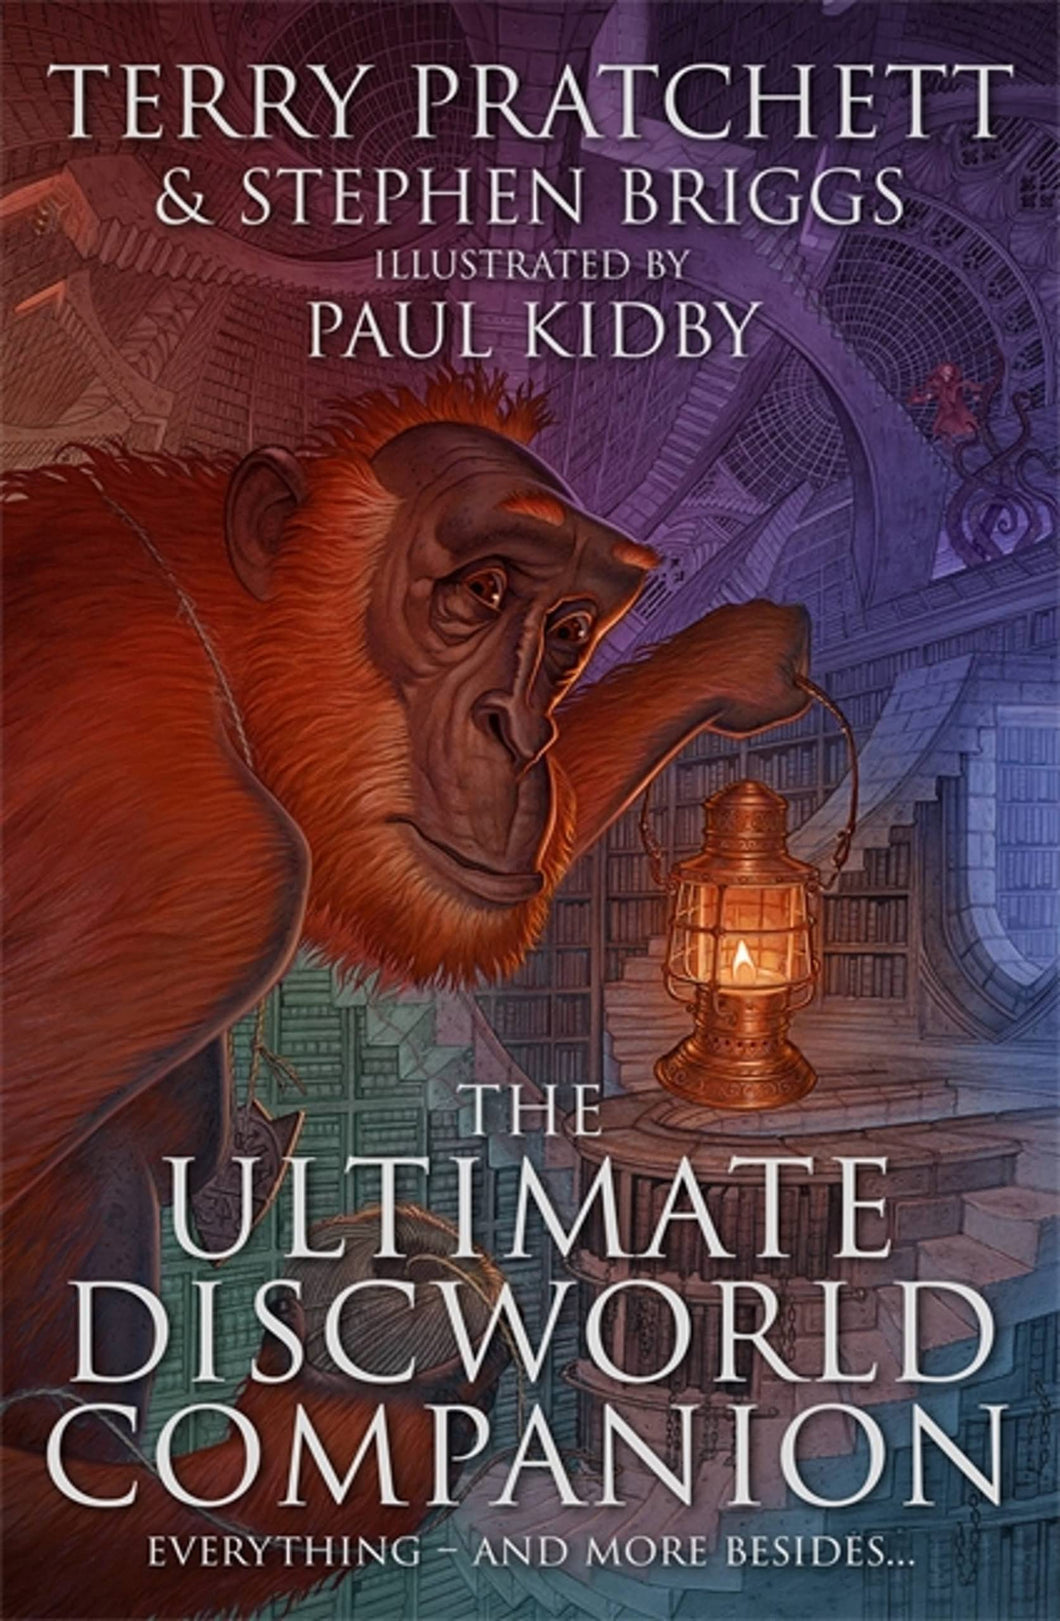 The Ultimate Discworld Companion, Terry Pratchett & Stephen Briggs